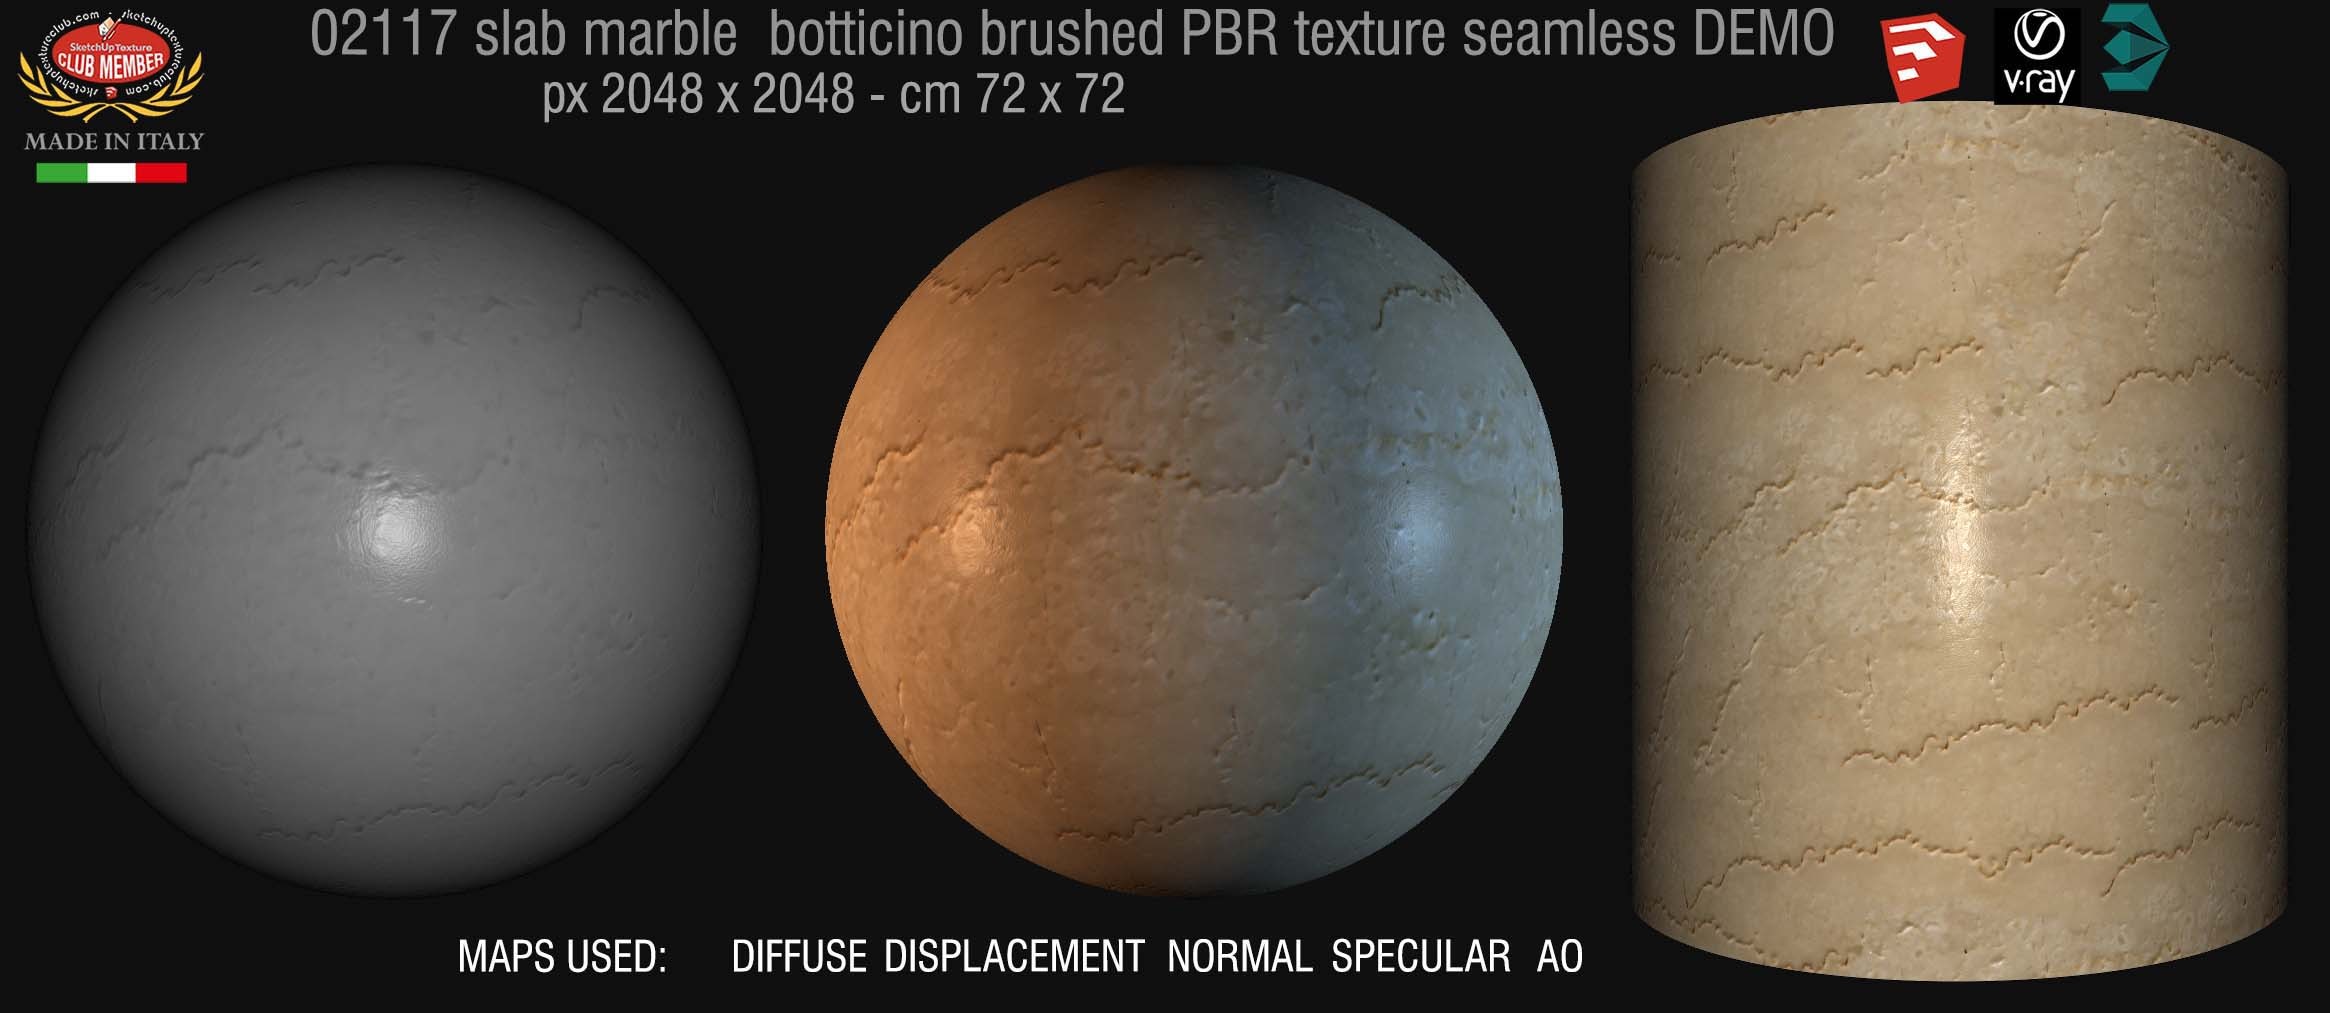 02117 slab marble botticino brushed PBR texture seamless DEMO